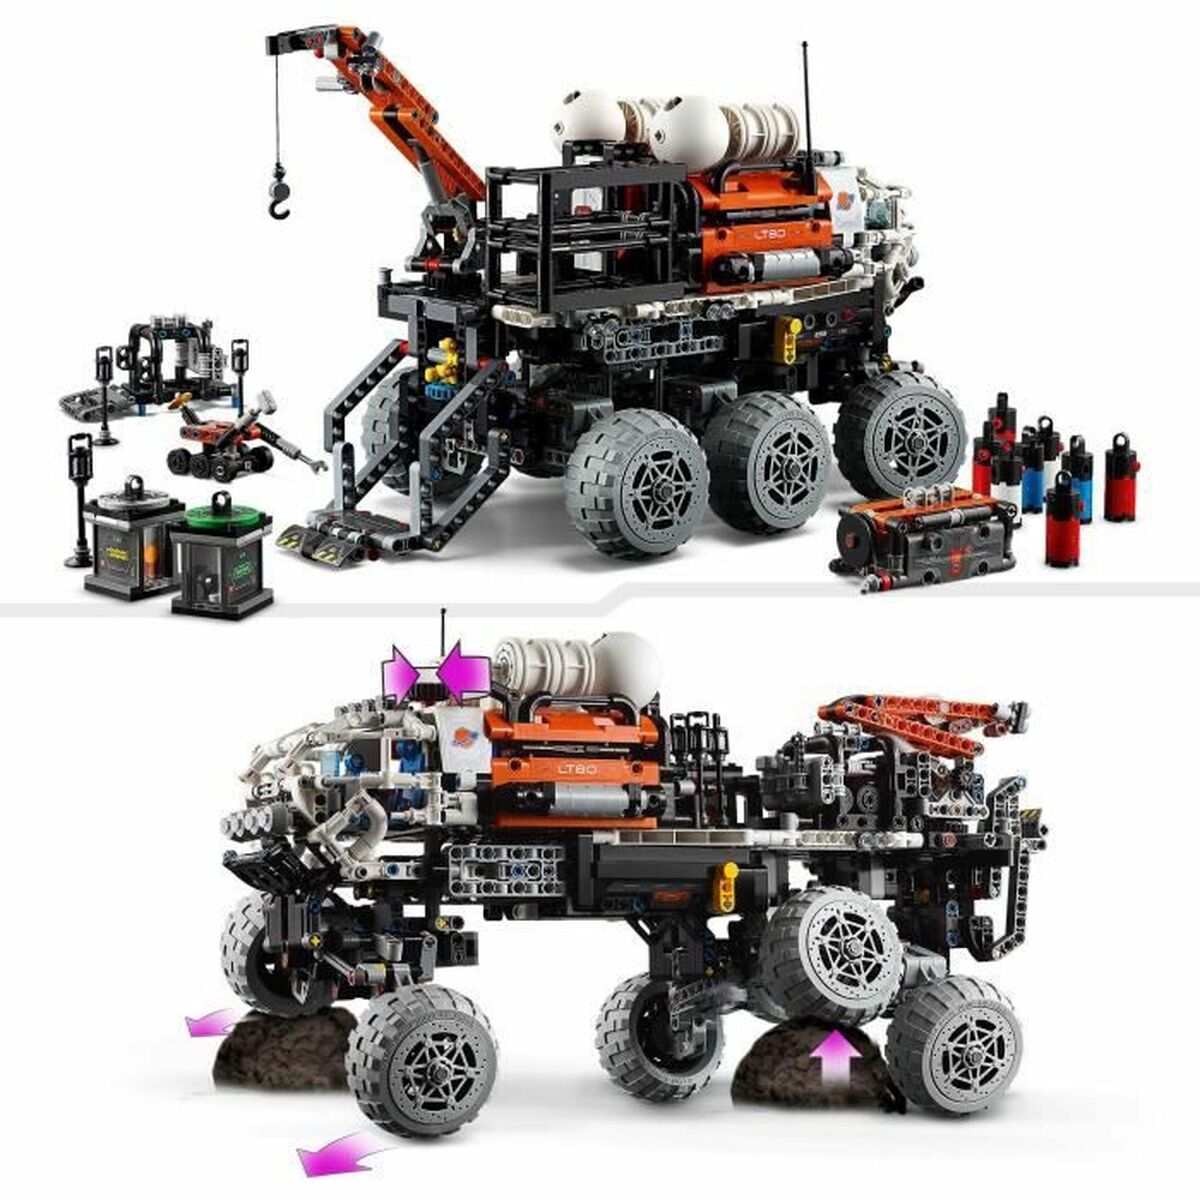 Bouwspel Lego Technic 42180 Mars Manned Exploration Rover Multicolour